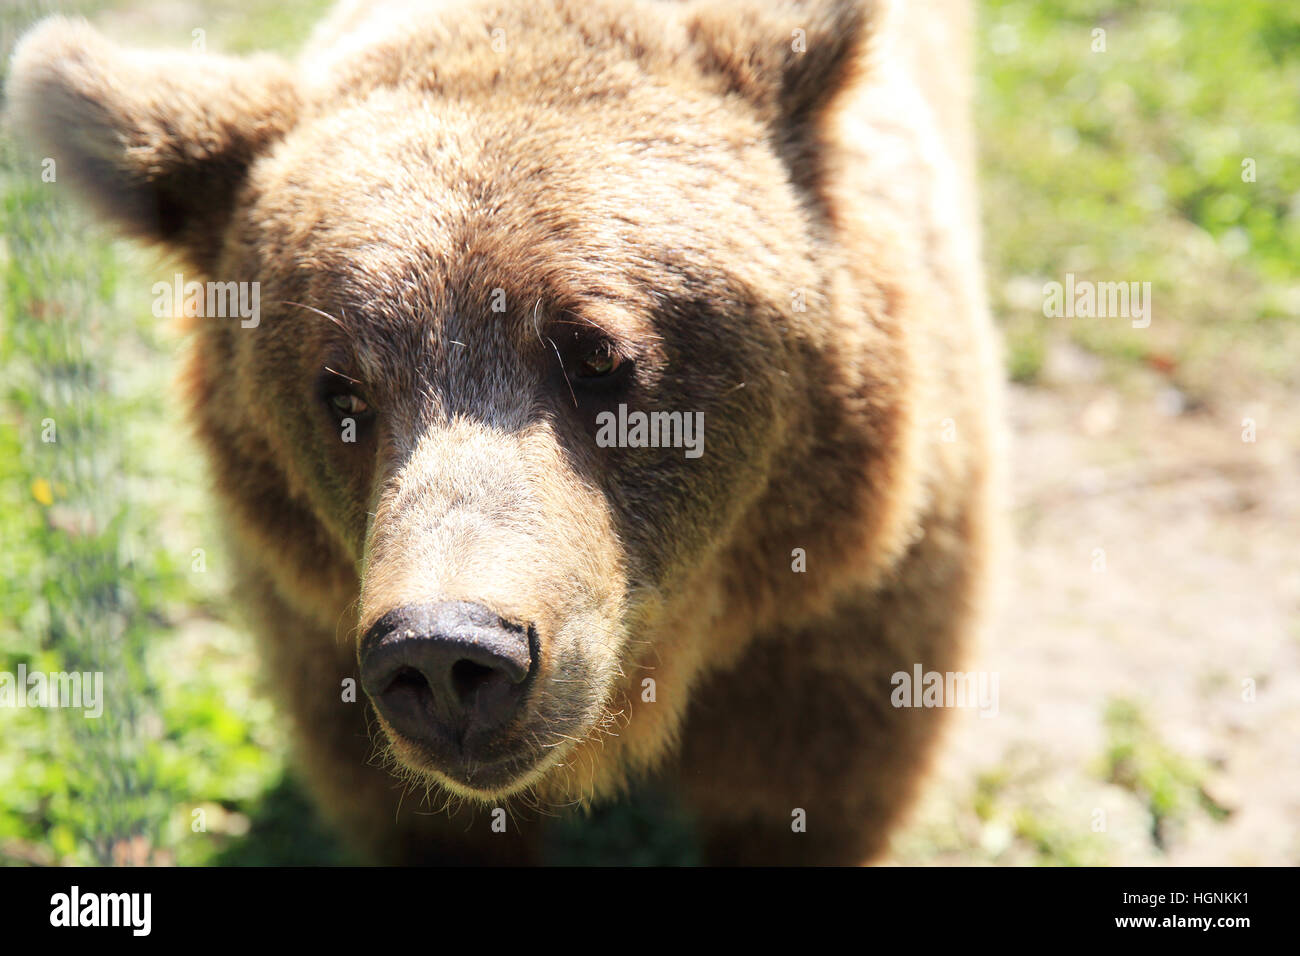 Zarnesti rescue bear sanctuary in Zarnesti, near Brasov, in Transylvania, Romania, east Europe Stock Photo